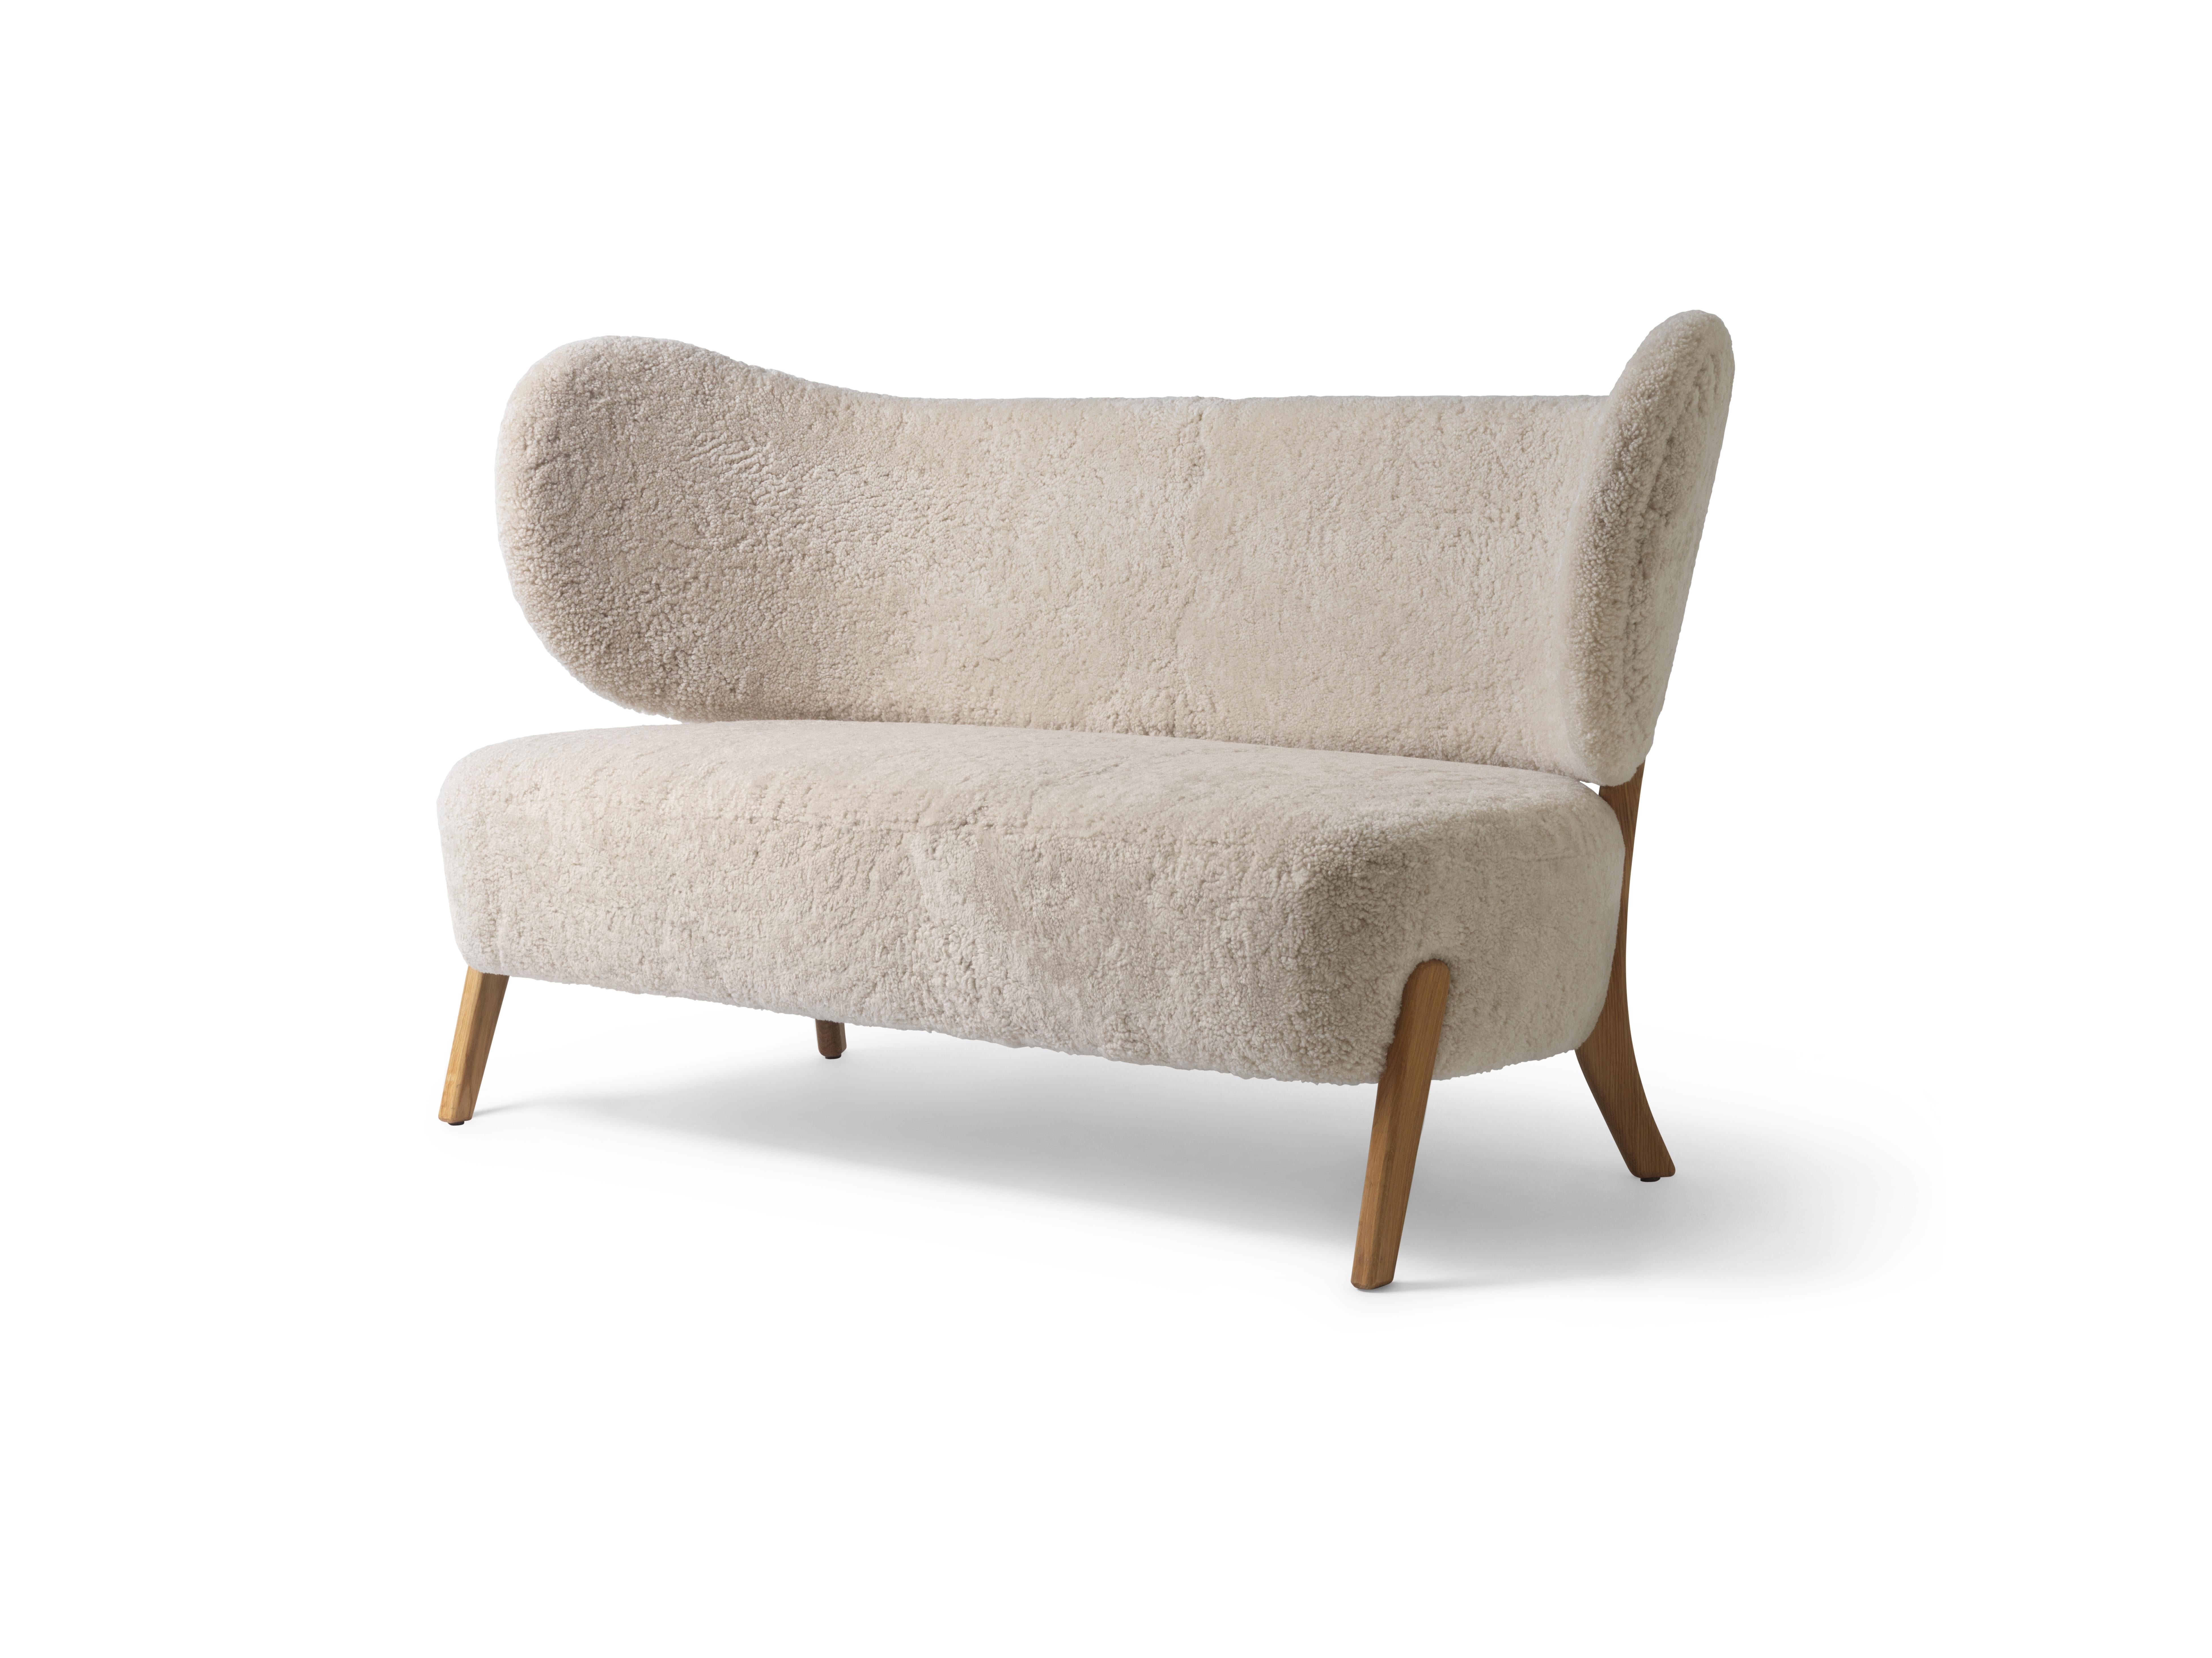 Moonlight sheepskin TMBO lounge sofa by Mazo Design
Dimensions: W 165 x D 68.5 x H 87 cm
Materials: Oak, Sheepskin.
Also available: ROMO/Linara, DAW/Royal, KVADRAT/Remix, KVADRAT/Hallingdal & Fiord, BUTE/Storr, DEDAR/Linear, DAW/Mohair & Mcnutt,